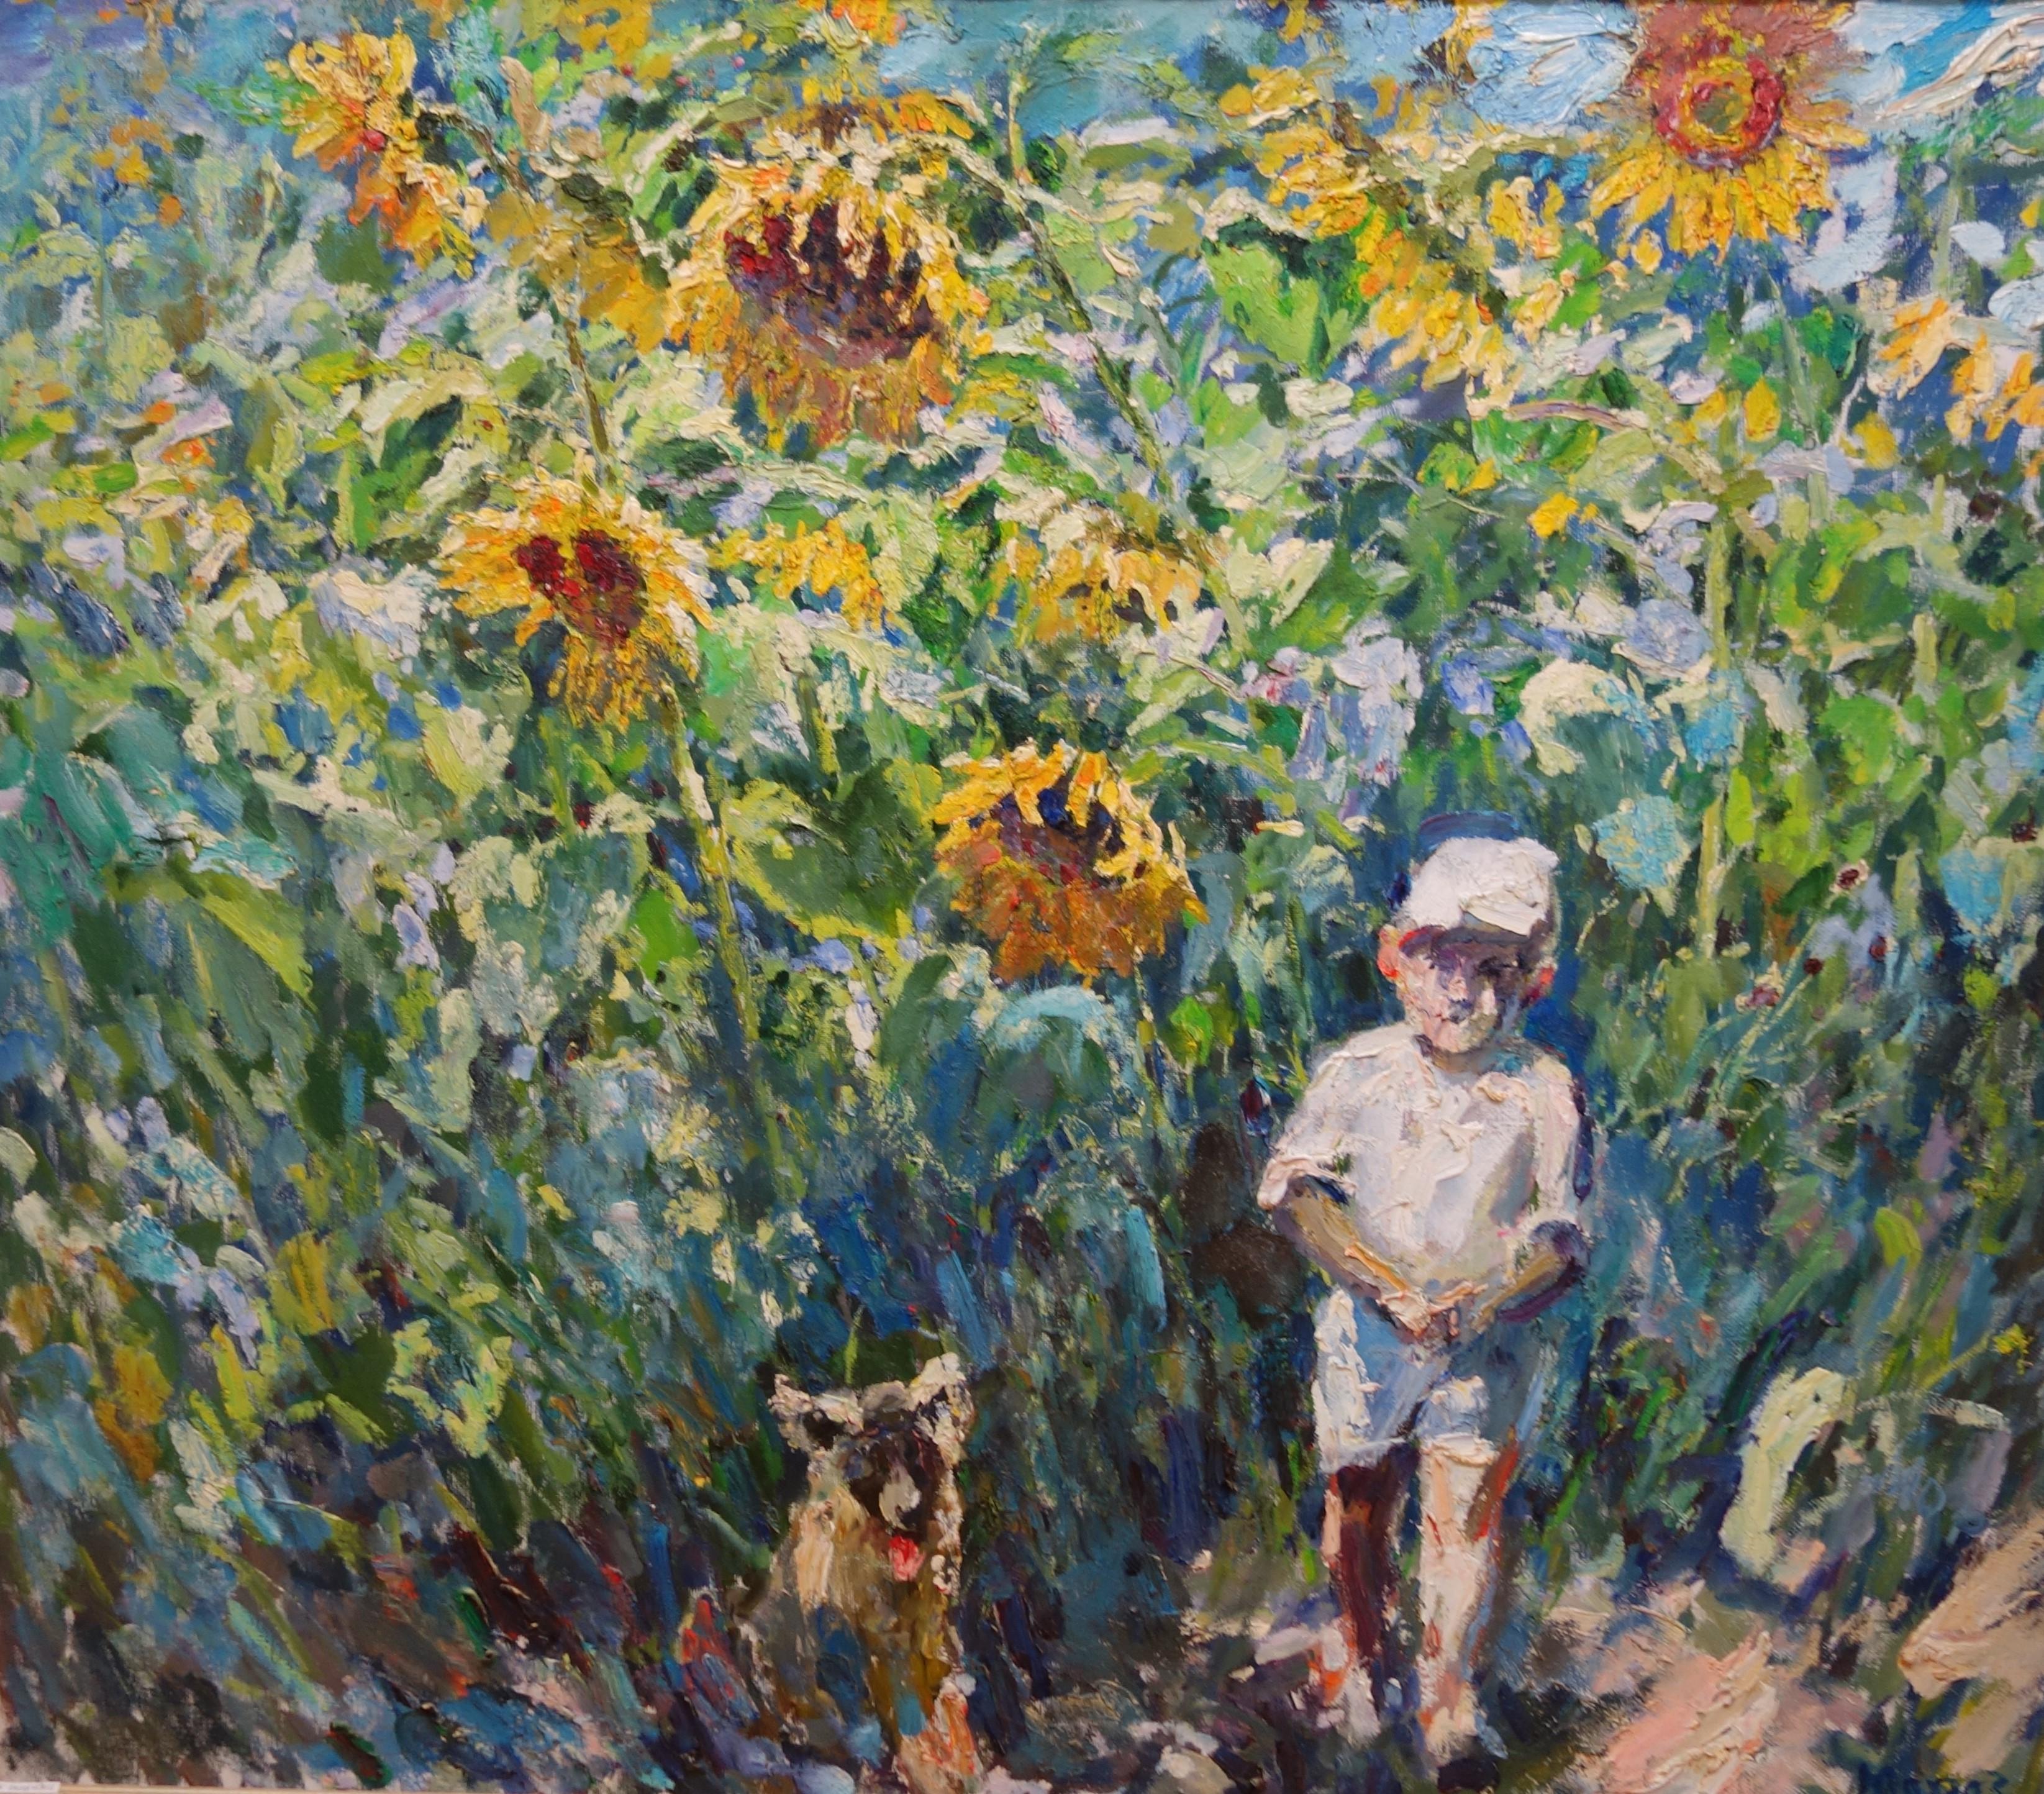 Georgij Moroz Animal Painting - "Child among sunflowers" cm. 148 x 126 Oil 